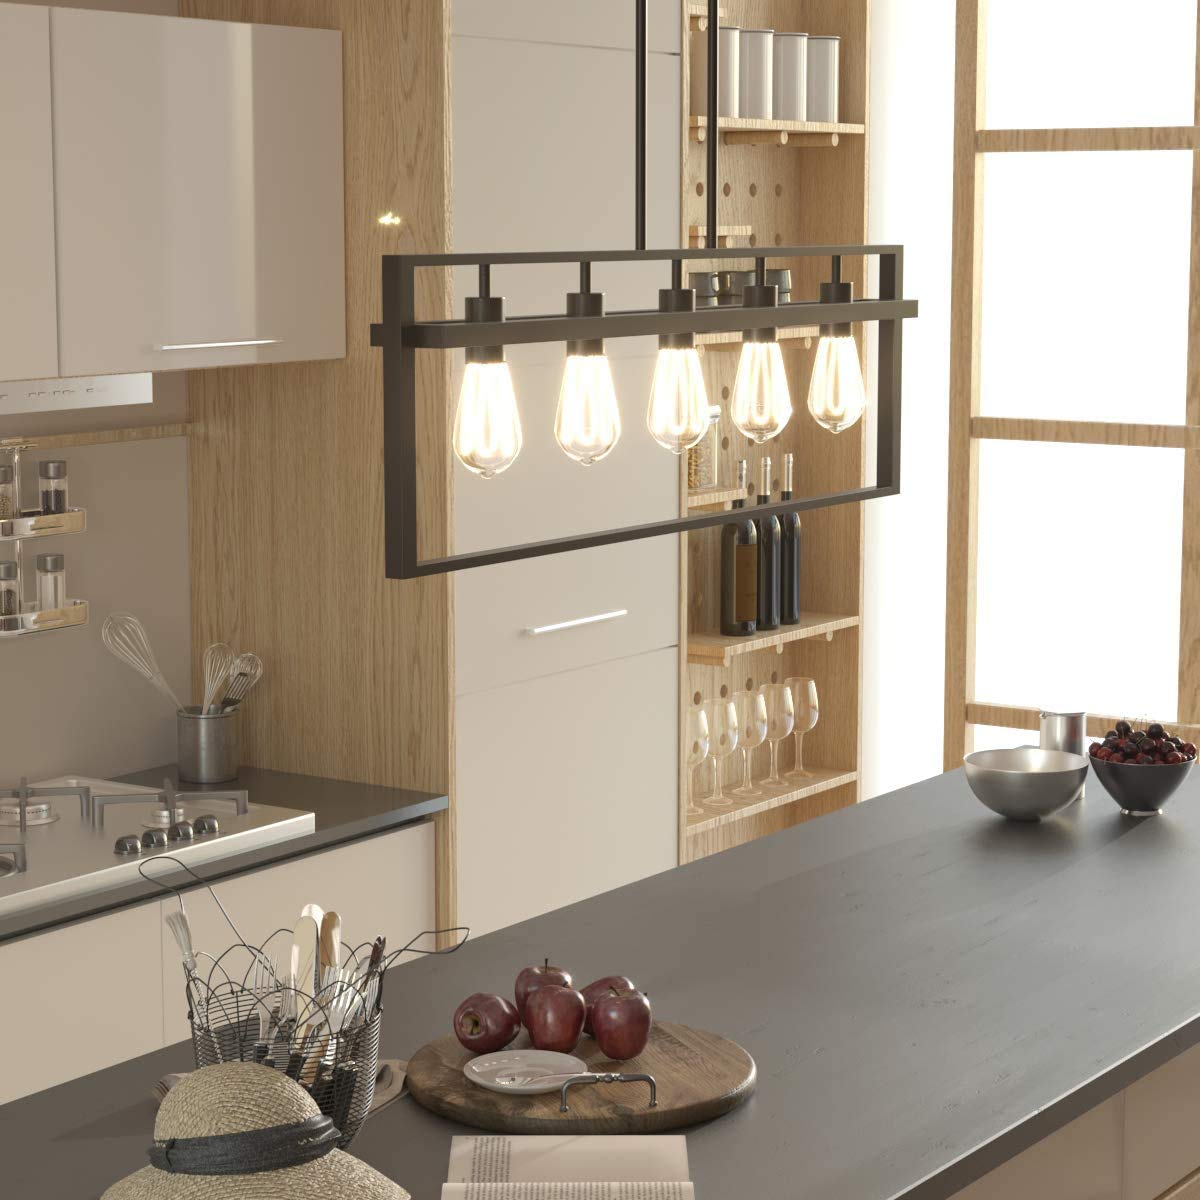 Tangkula 5-Light Island Lighting, Modern Style Domestic Linear Pendant Light Fixture